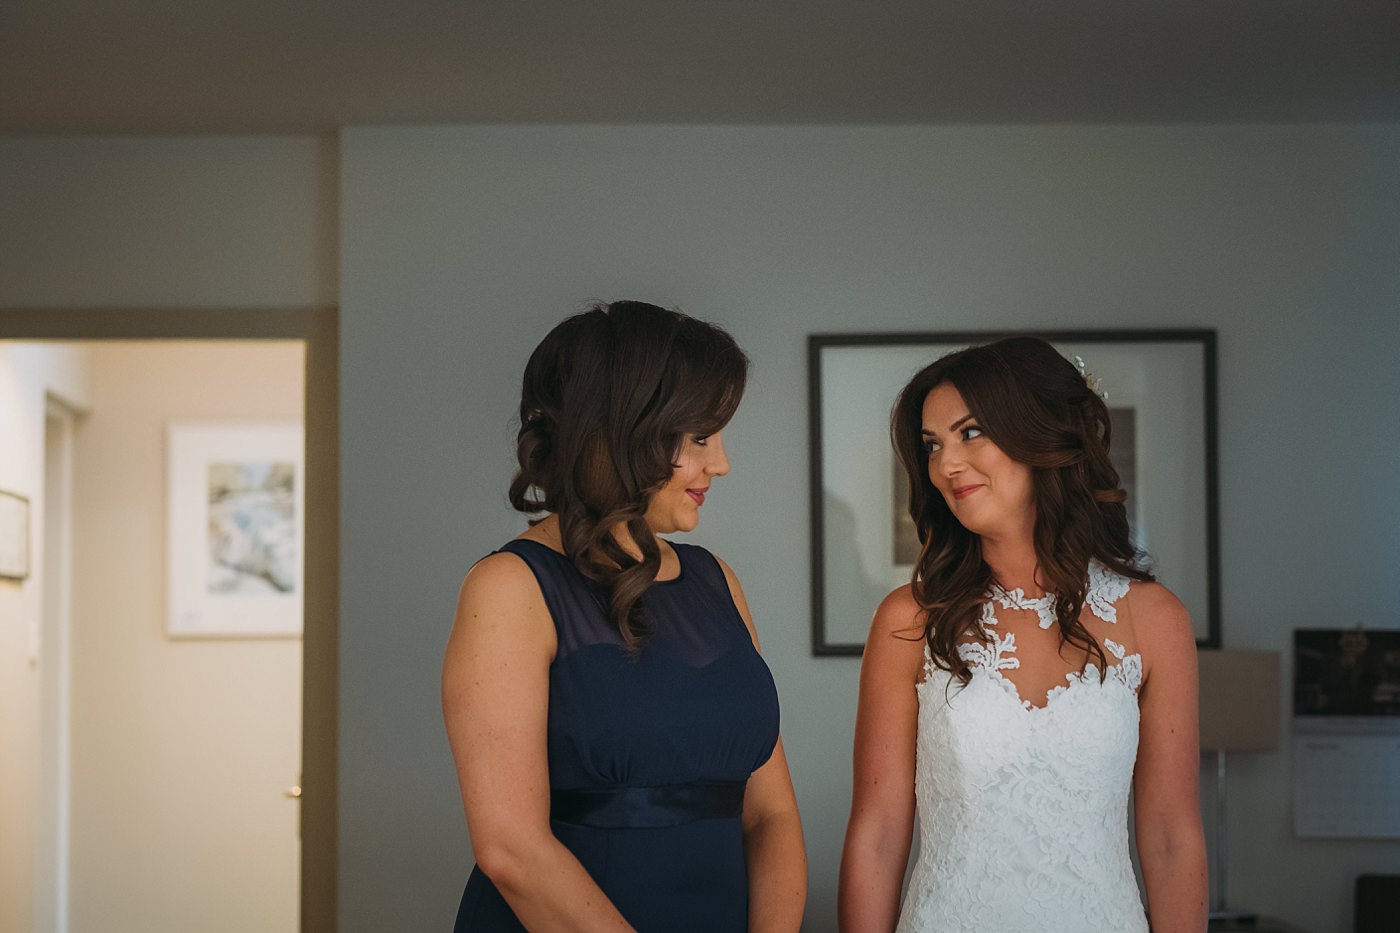 Moment between bride and bridesmaid during a Christmas wedding at Glen Tanar